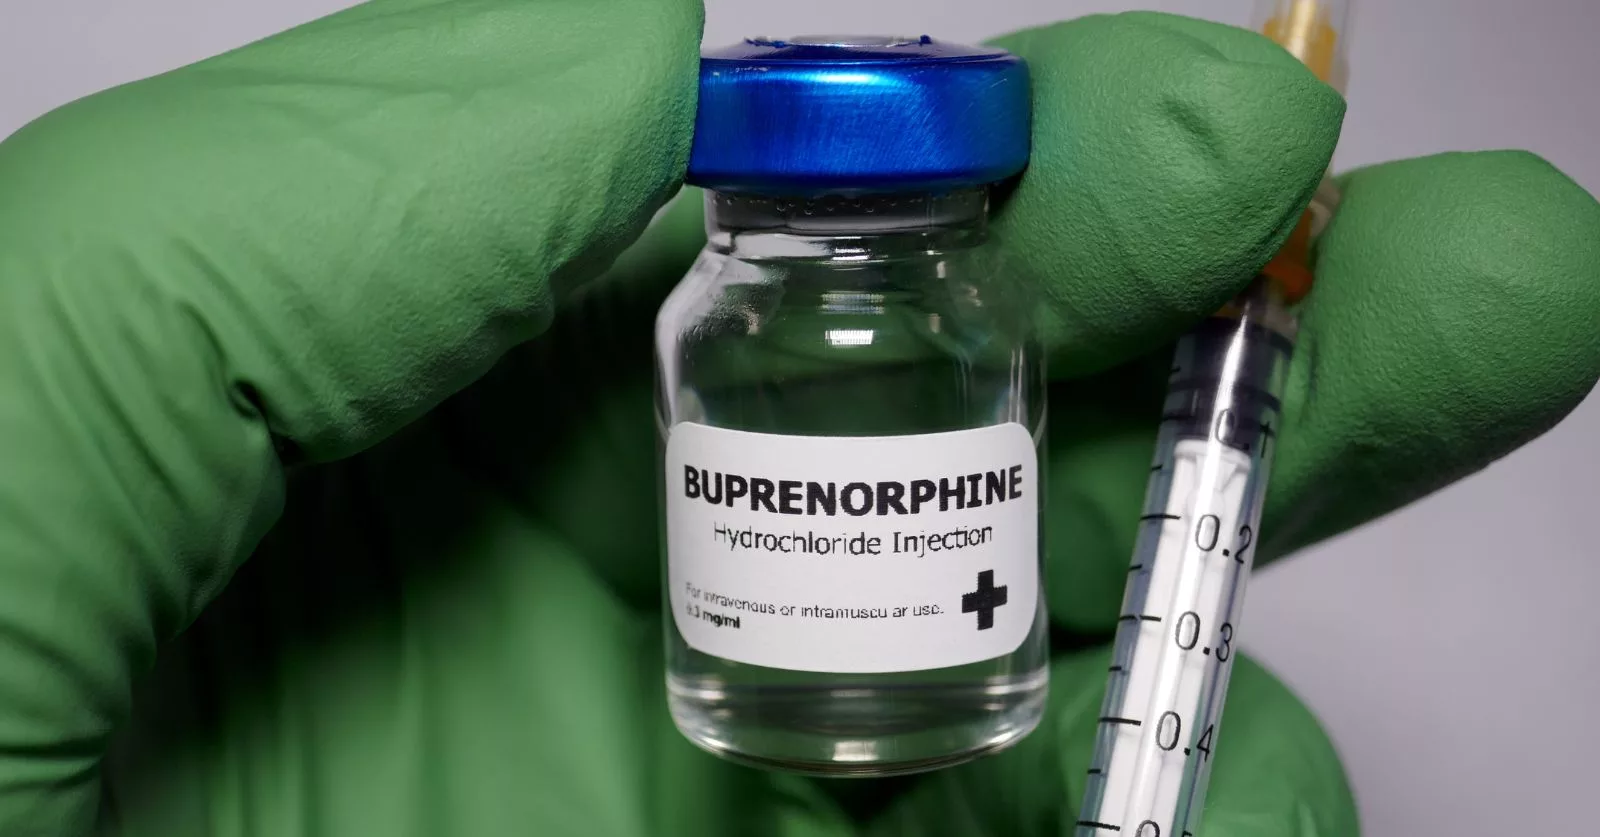 Study reveals alarming lack of Buprenorphine in adolescent treatment centers amidst rising overdose deaths